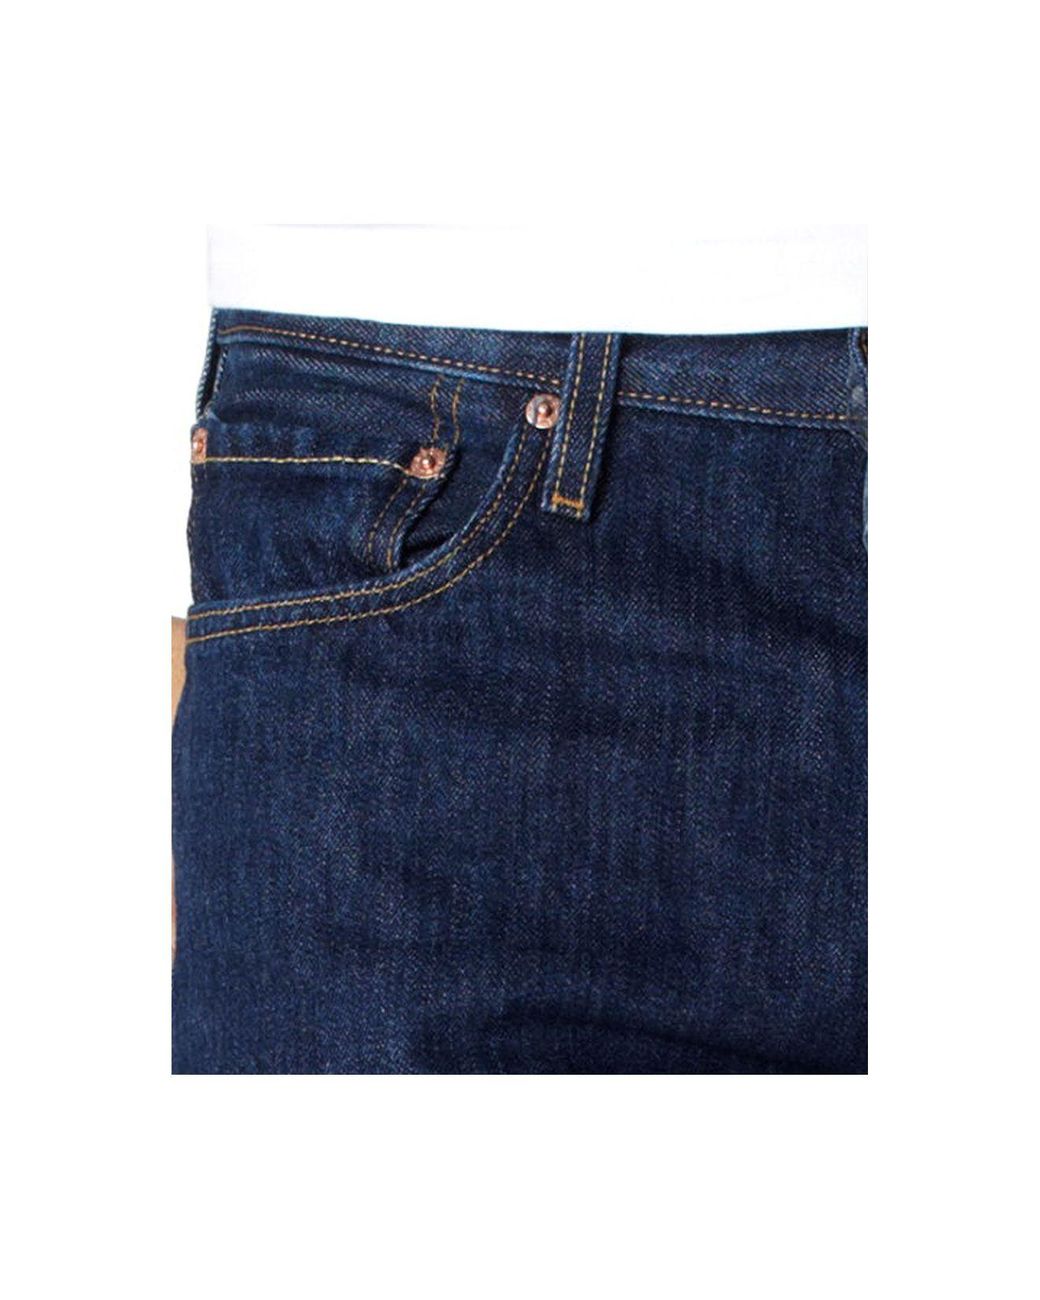 501 Original Fit Non-stretch Jeans 